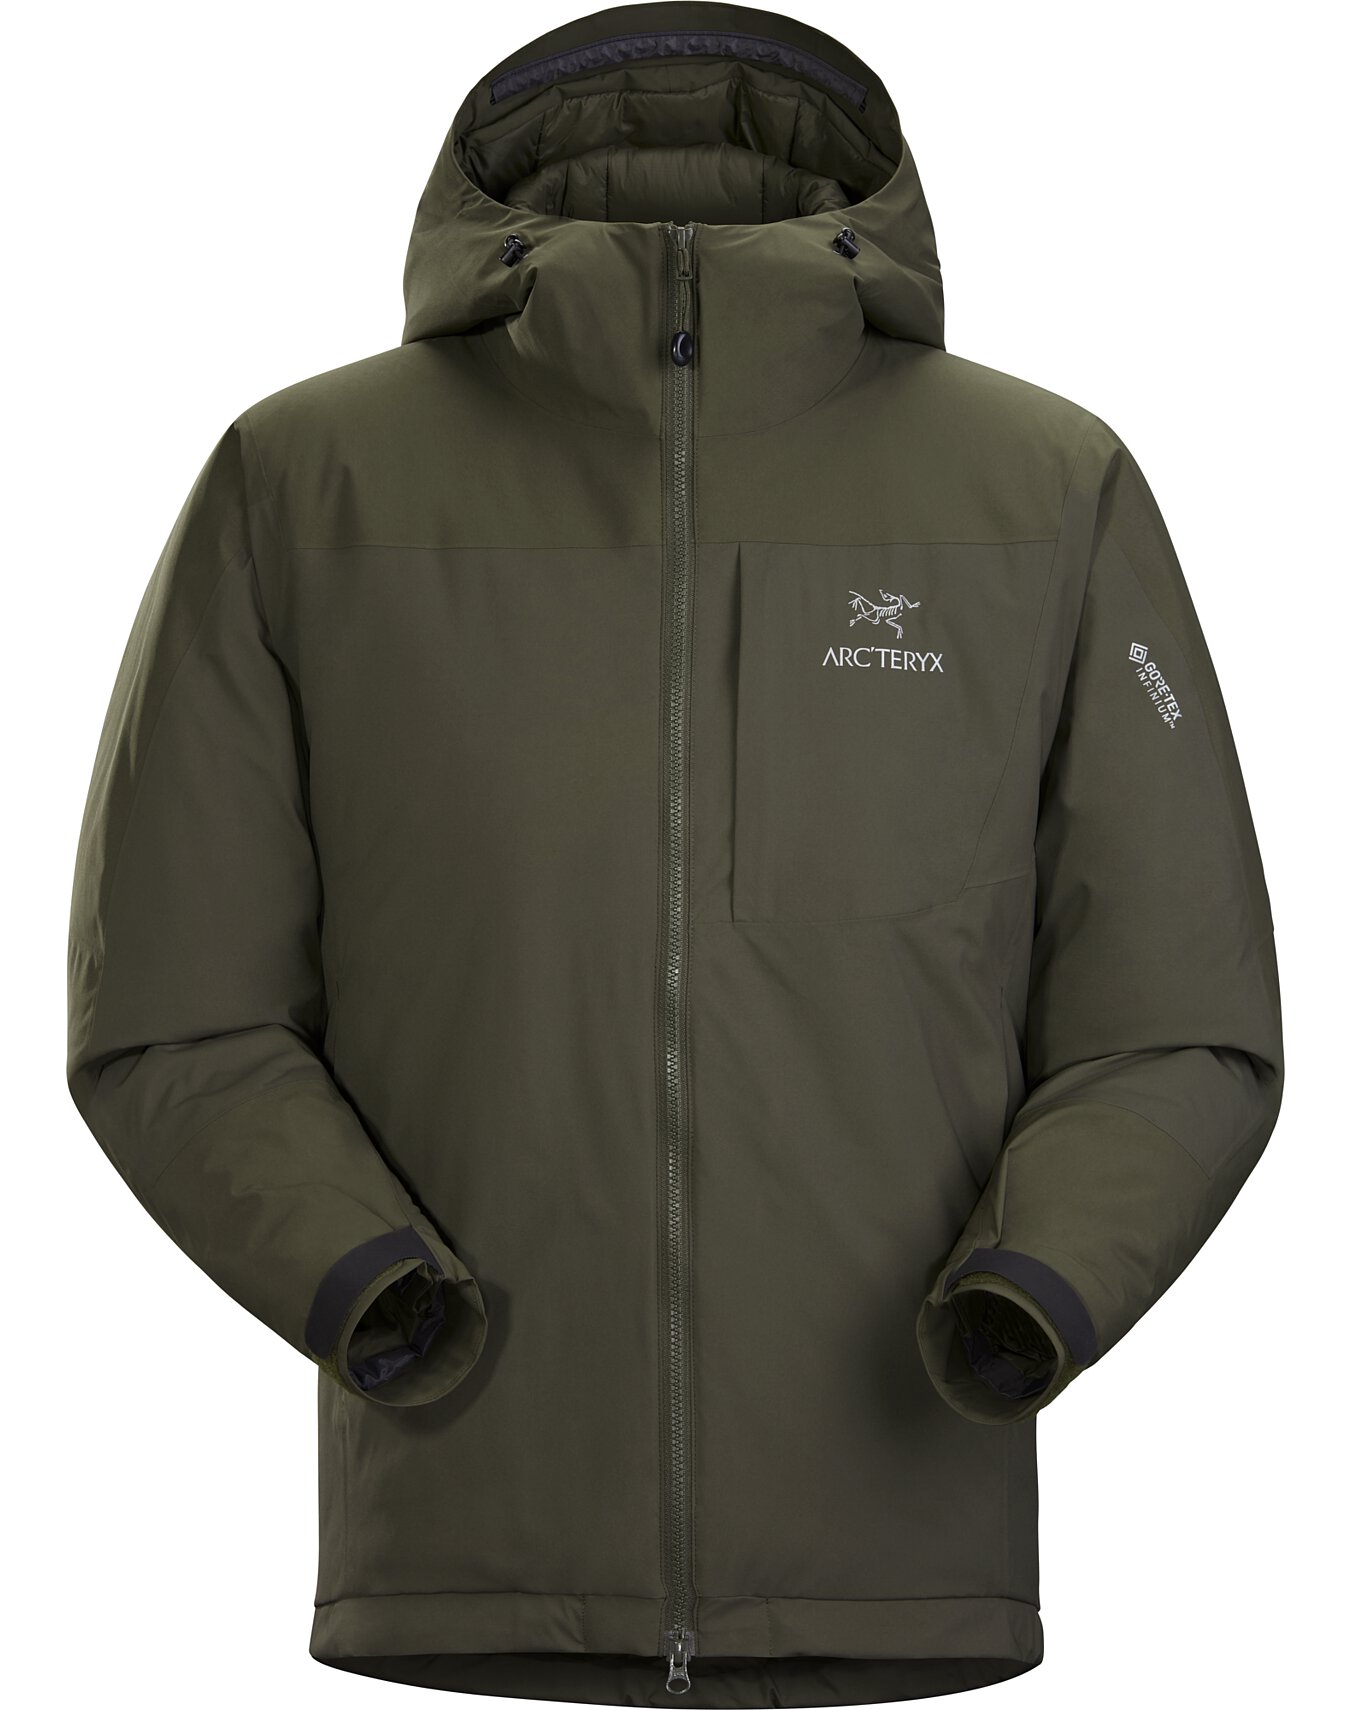 kappa jackets online